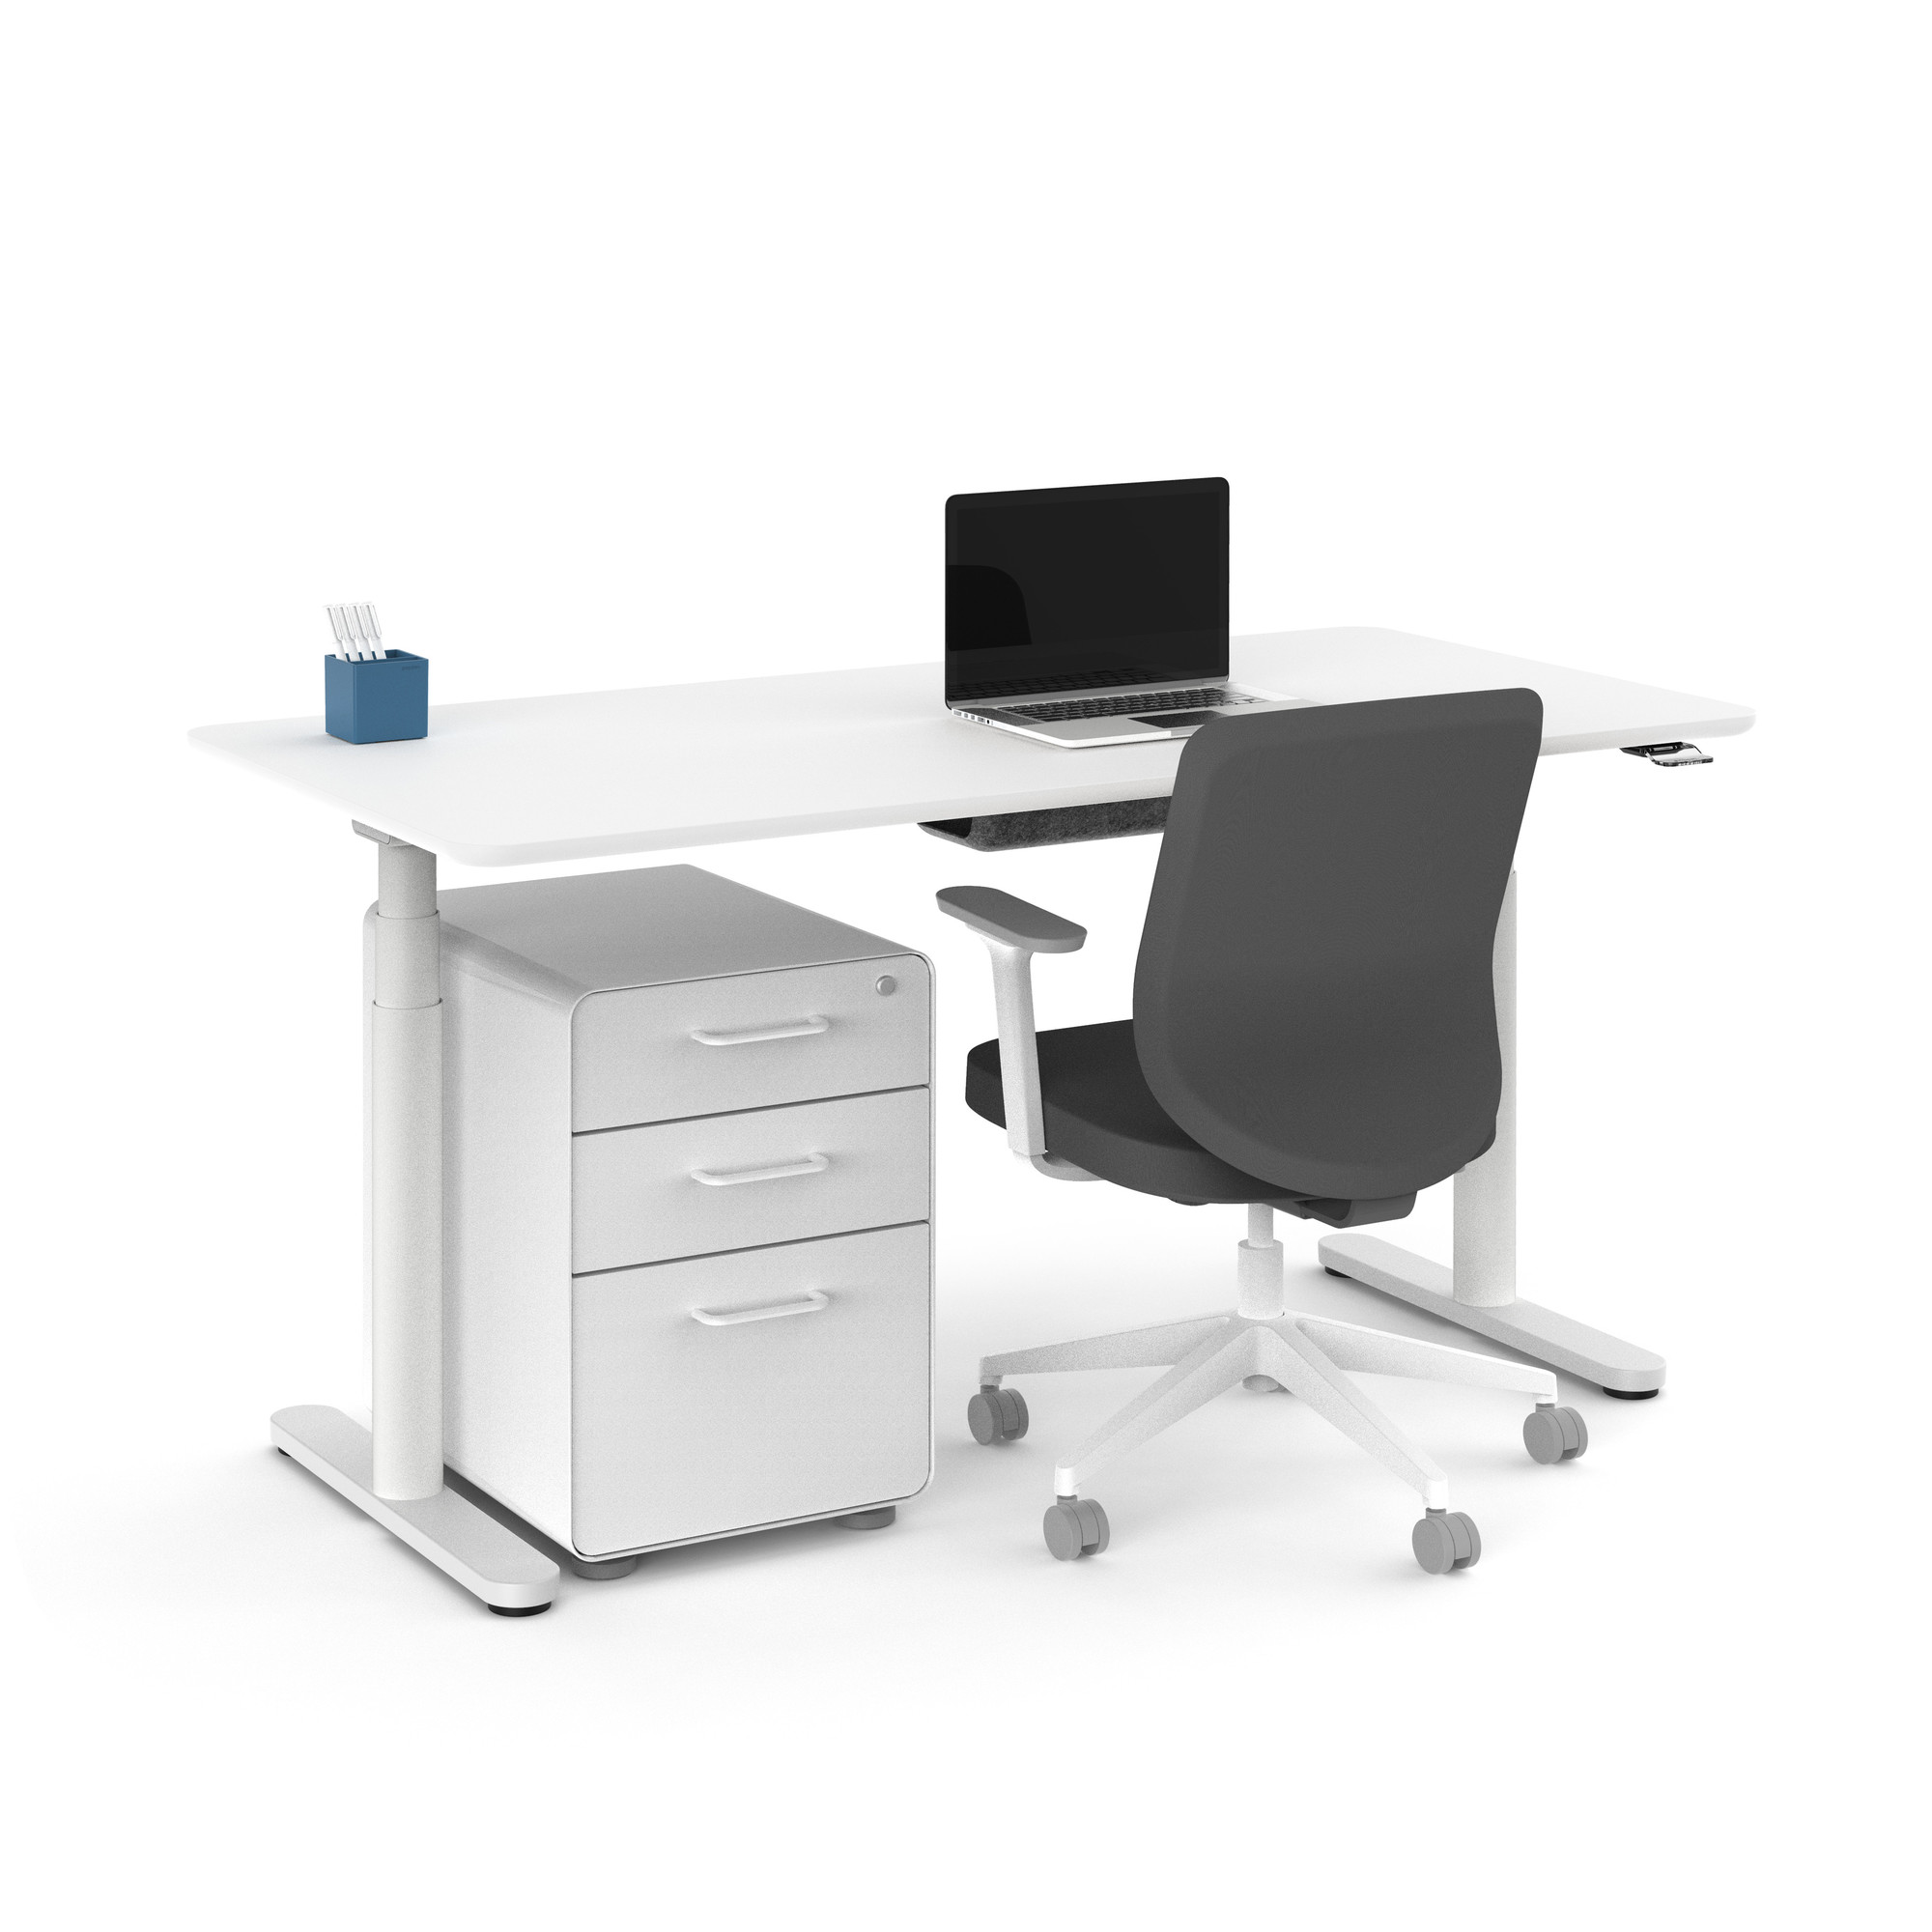 Raise Adjustable Height Single Desk, White Legs